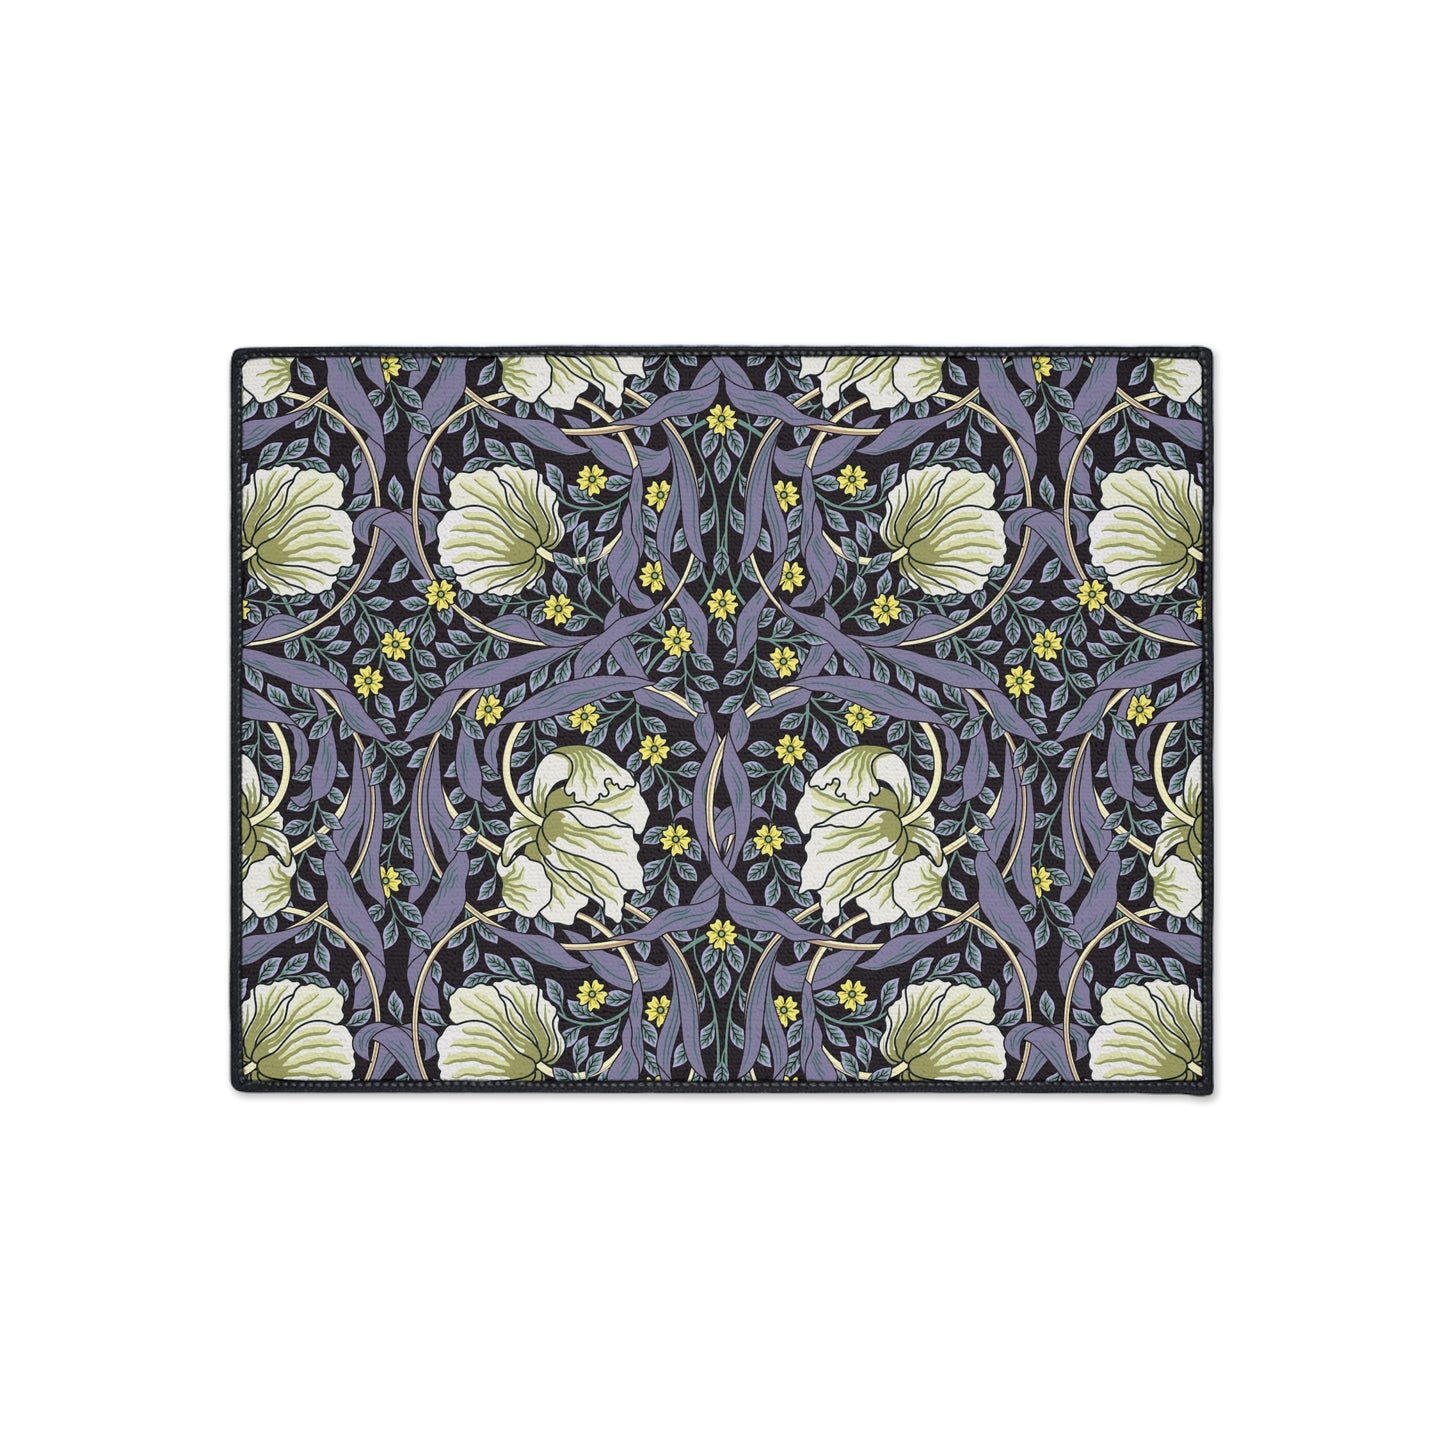 william-morris-co-heavy-duty-floor-mat-floor-mat-pimpernel-collection-lavender-5